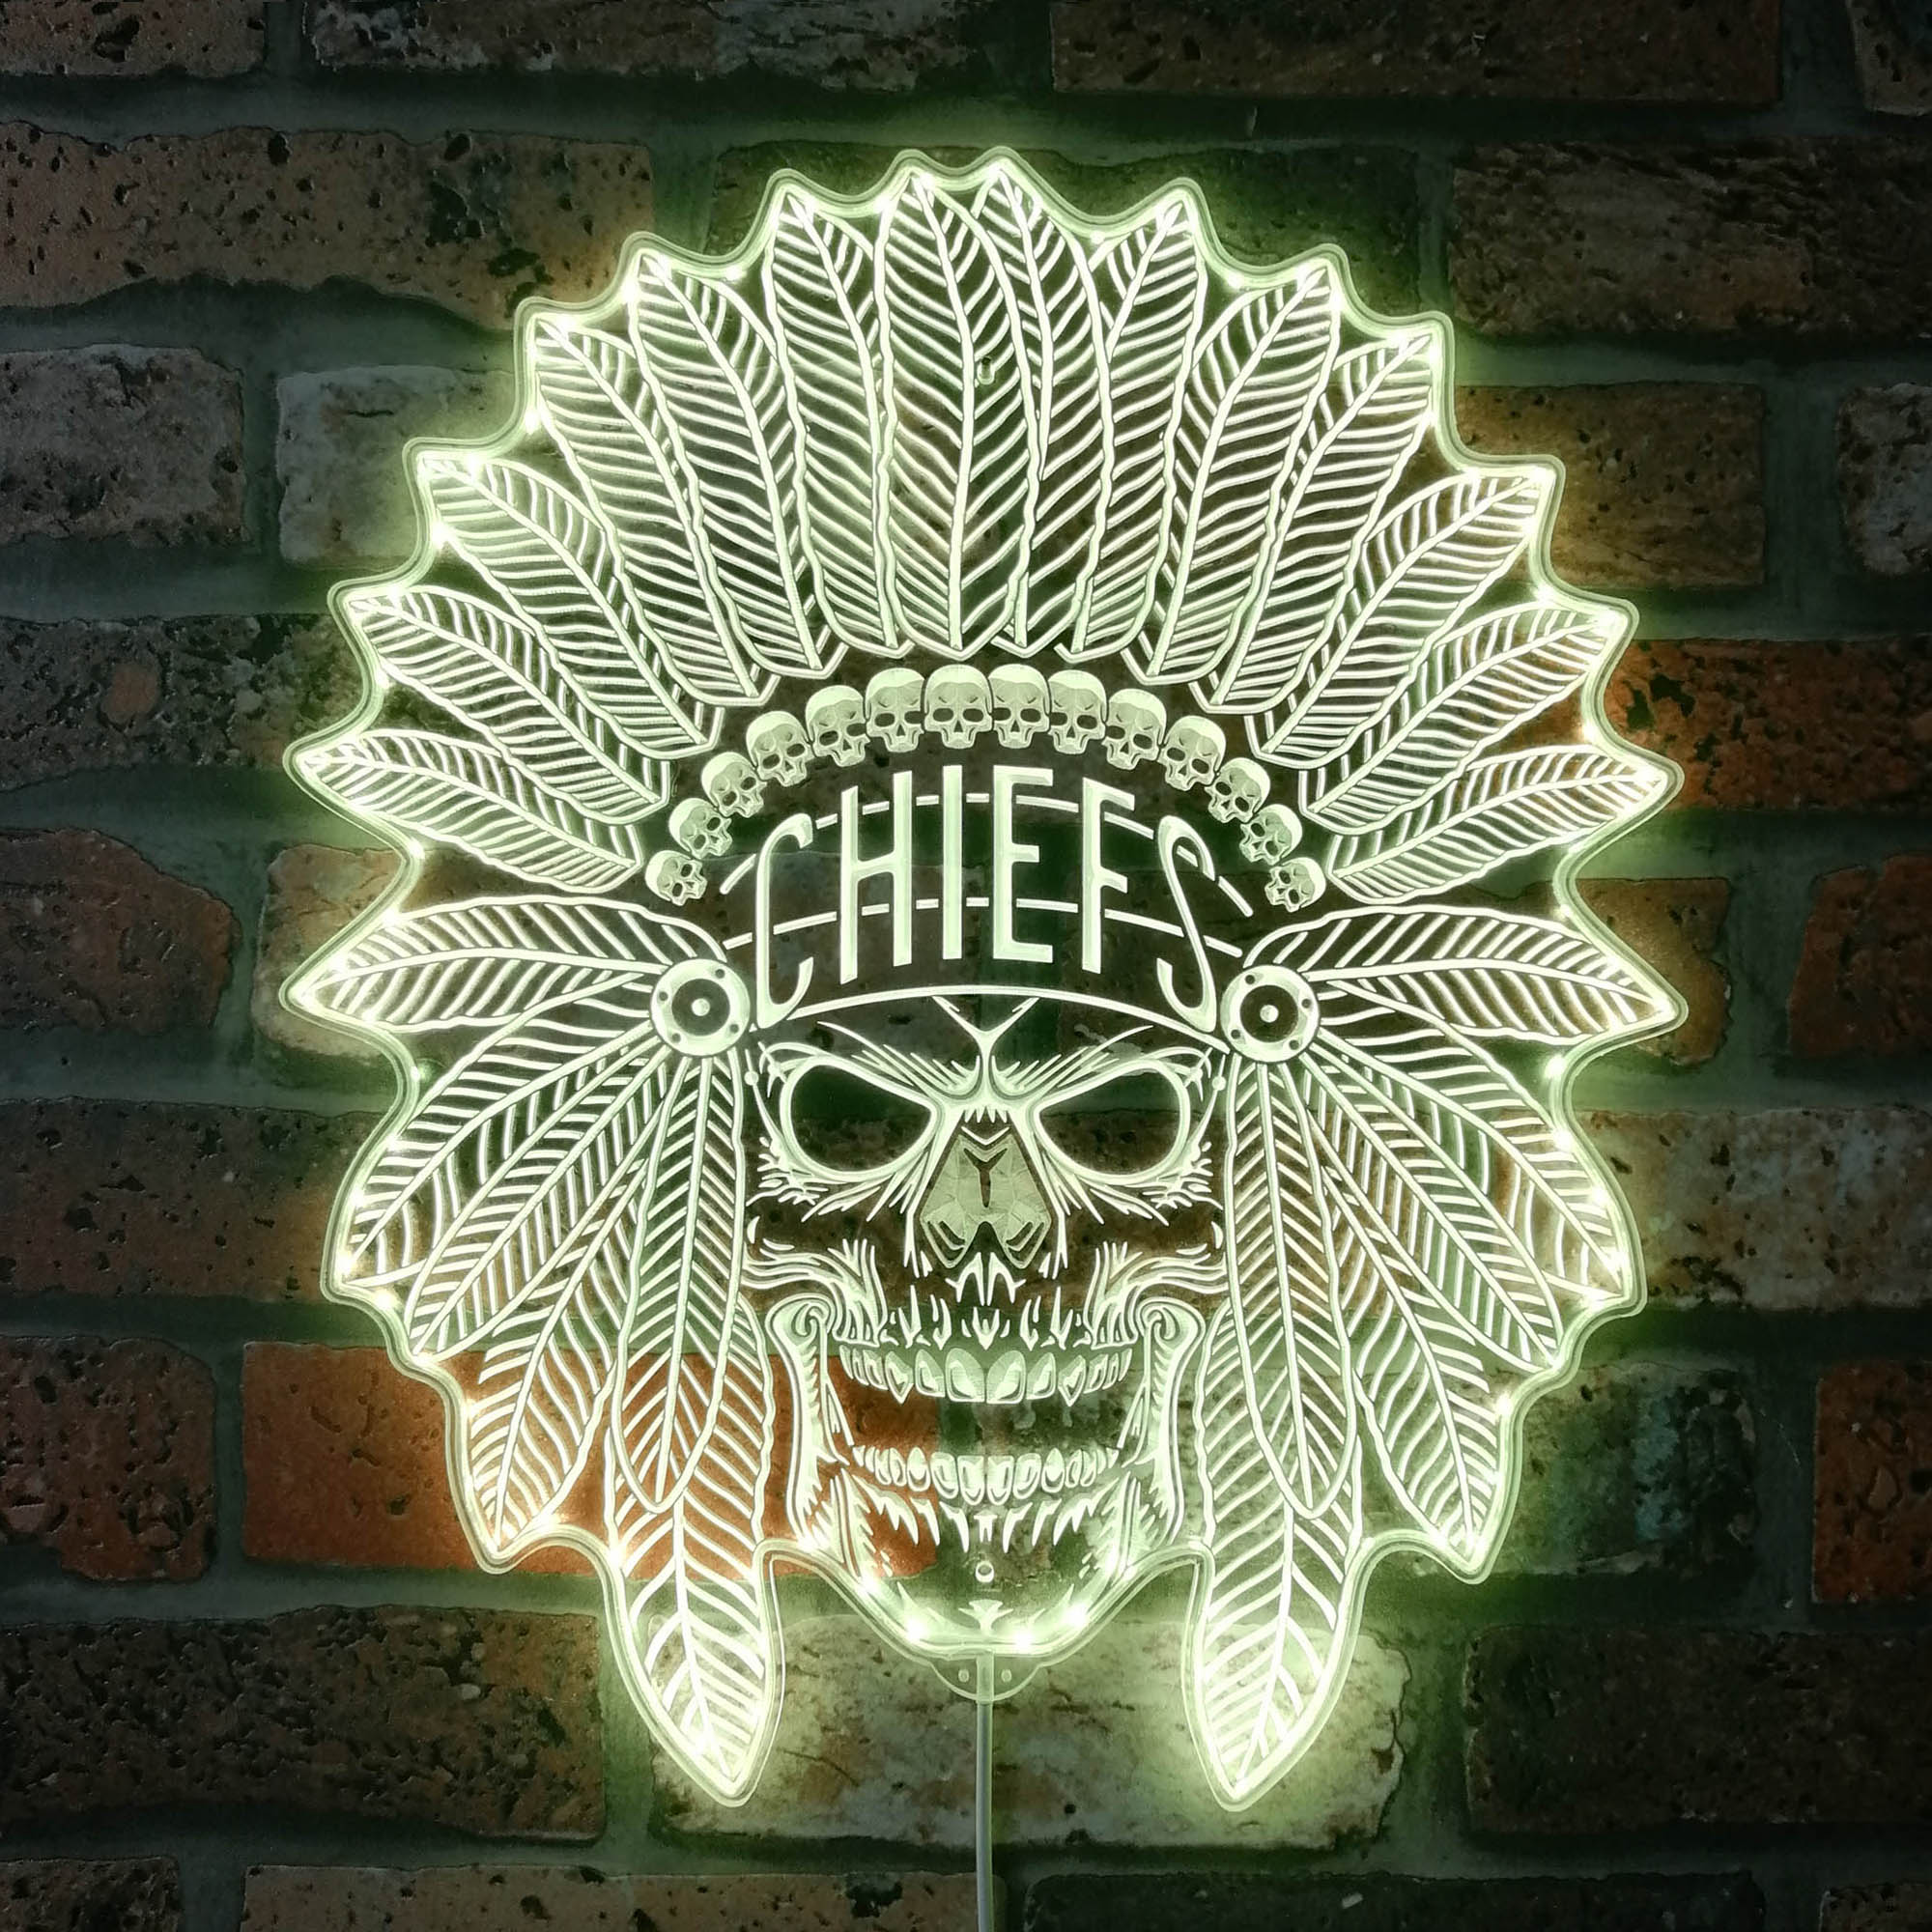 Kansas City Chiefs Dynamic RGB Edge Lit LED Sign